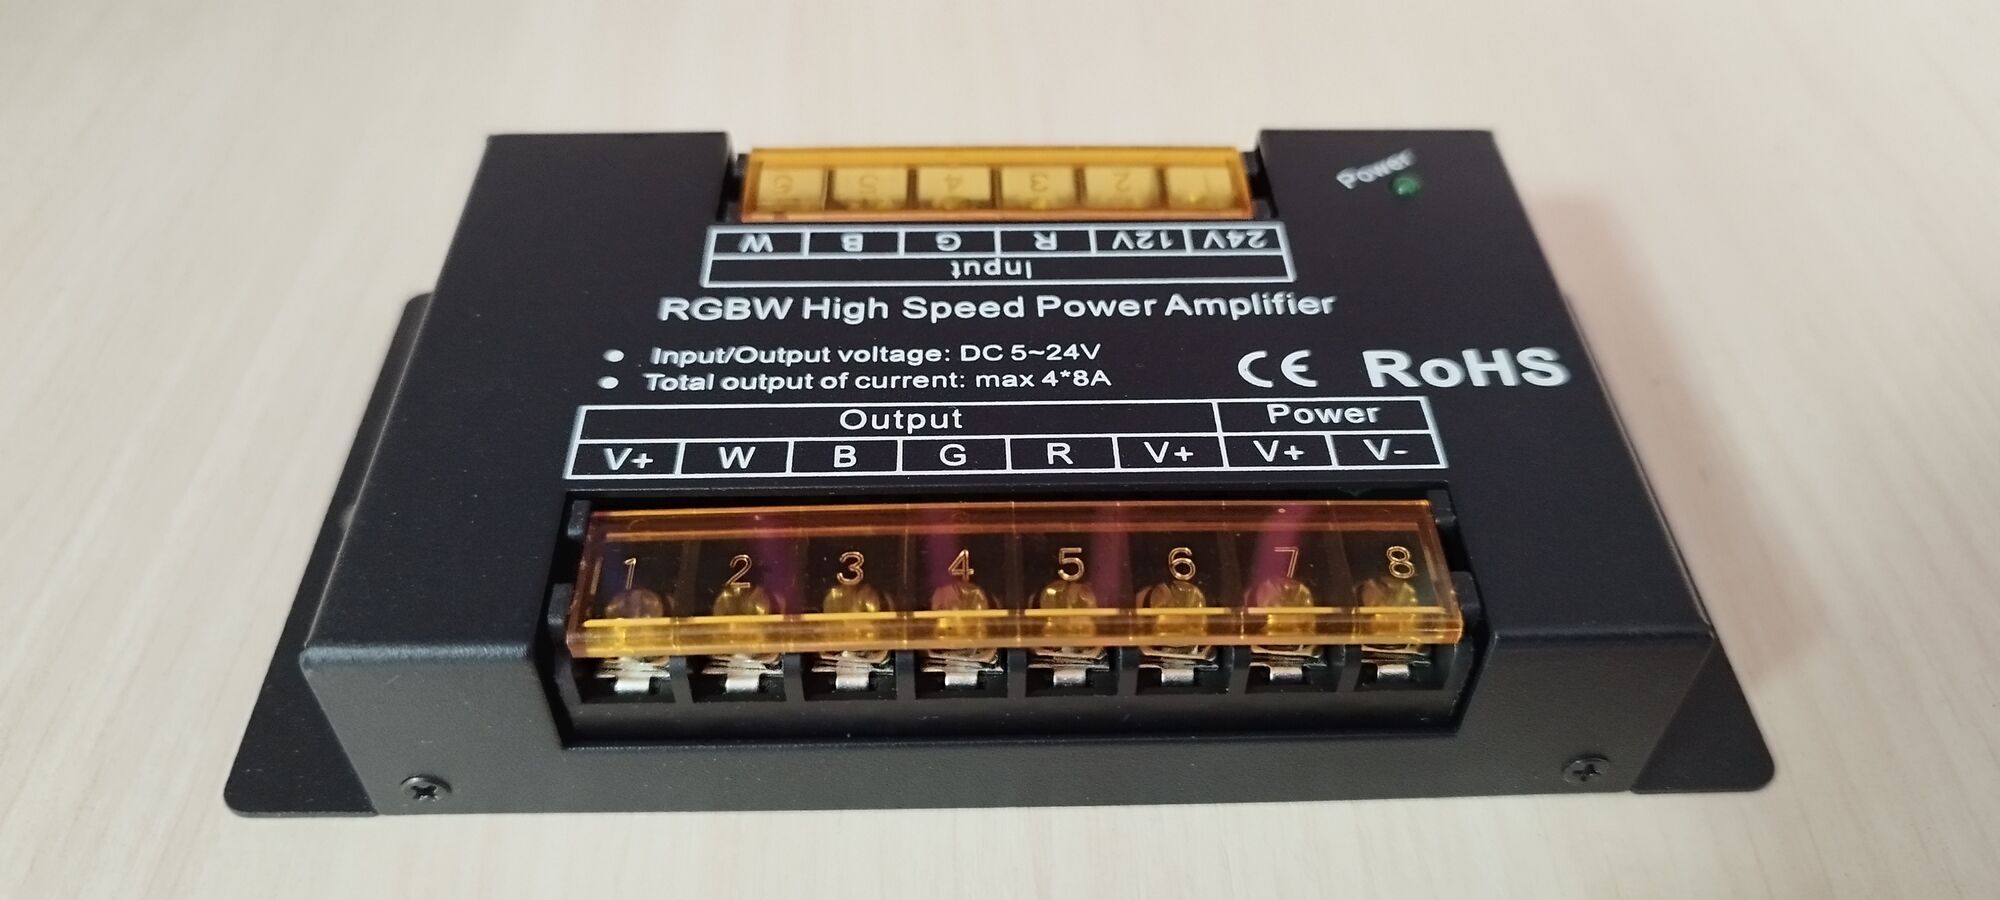 Усилитель RGB+W 5-24V, 32A 2